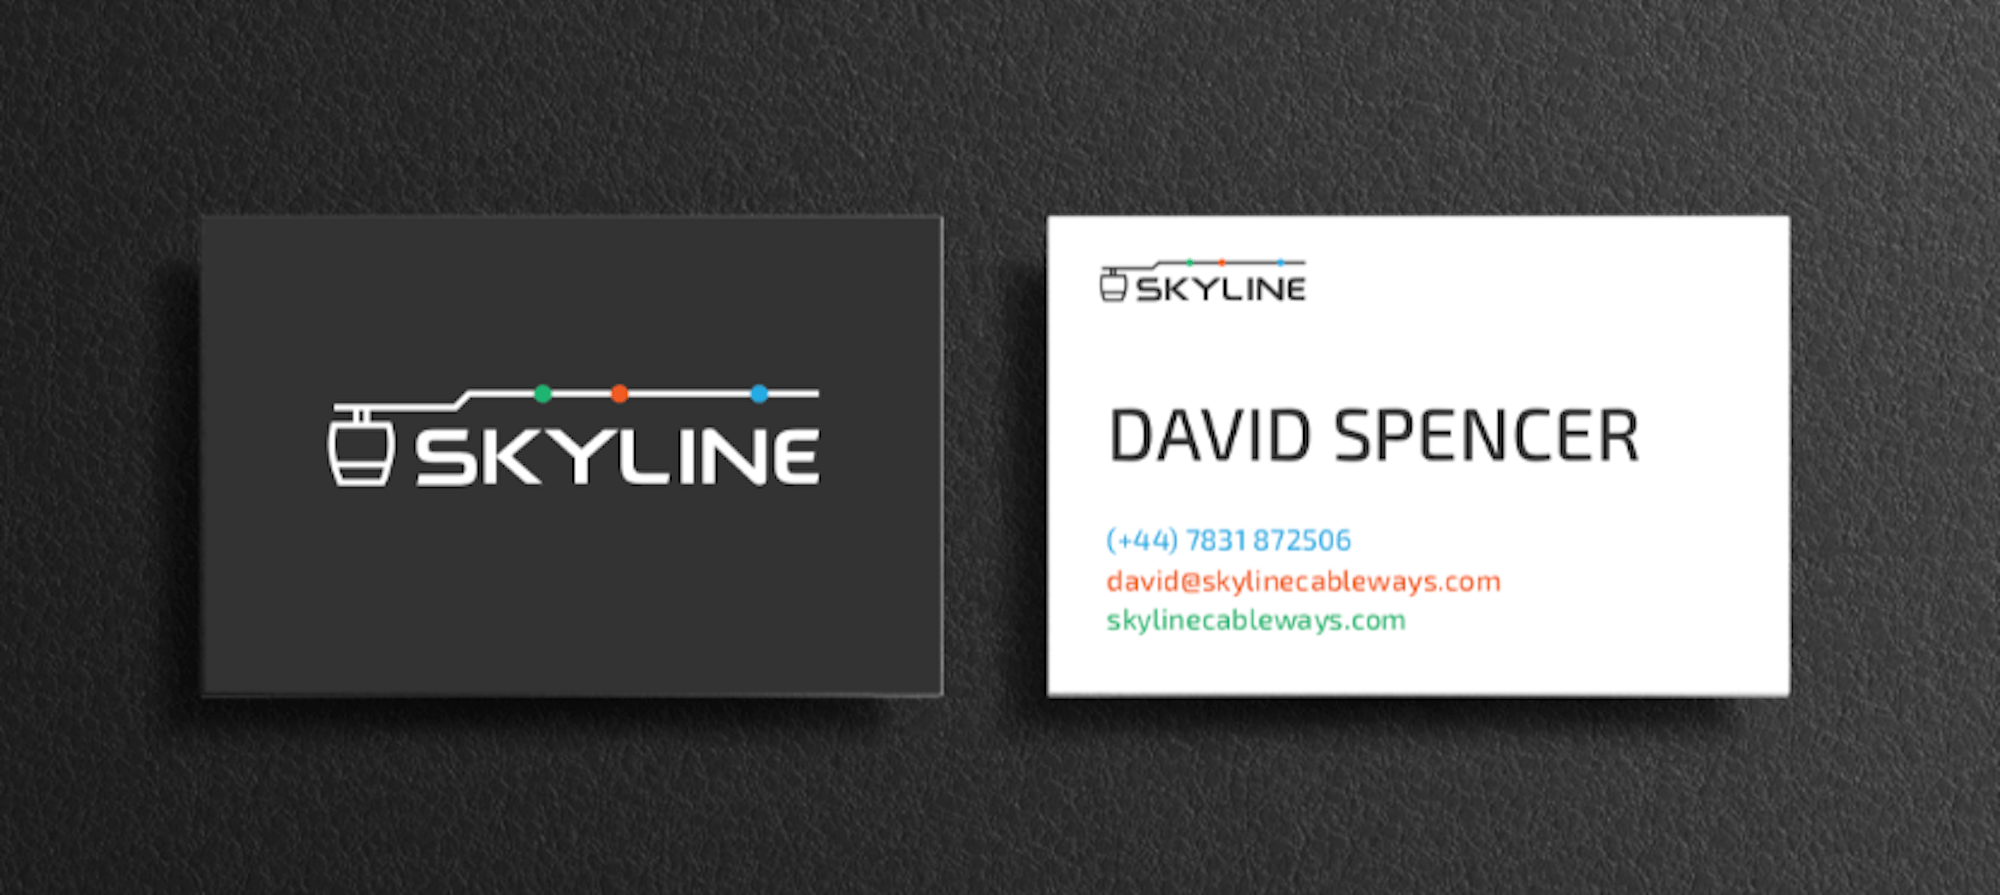 Skyline's new business cards.